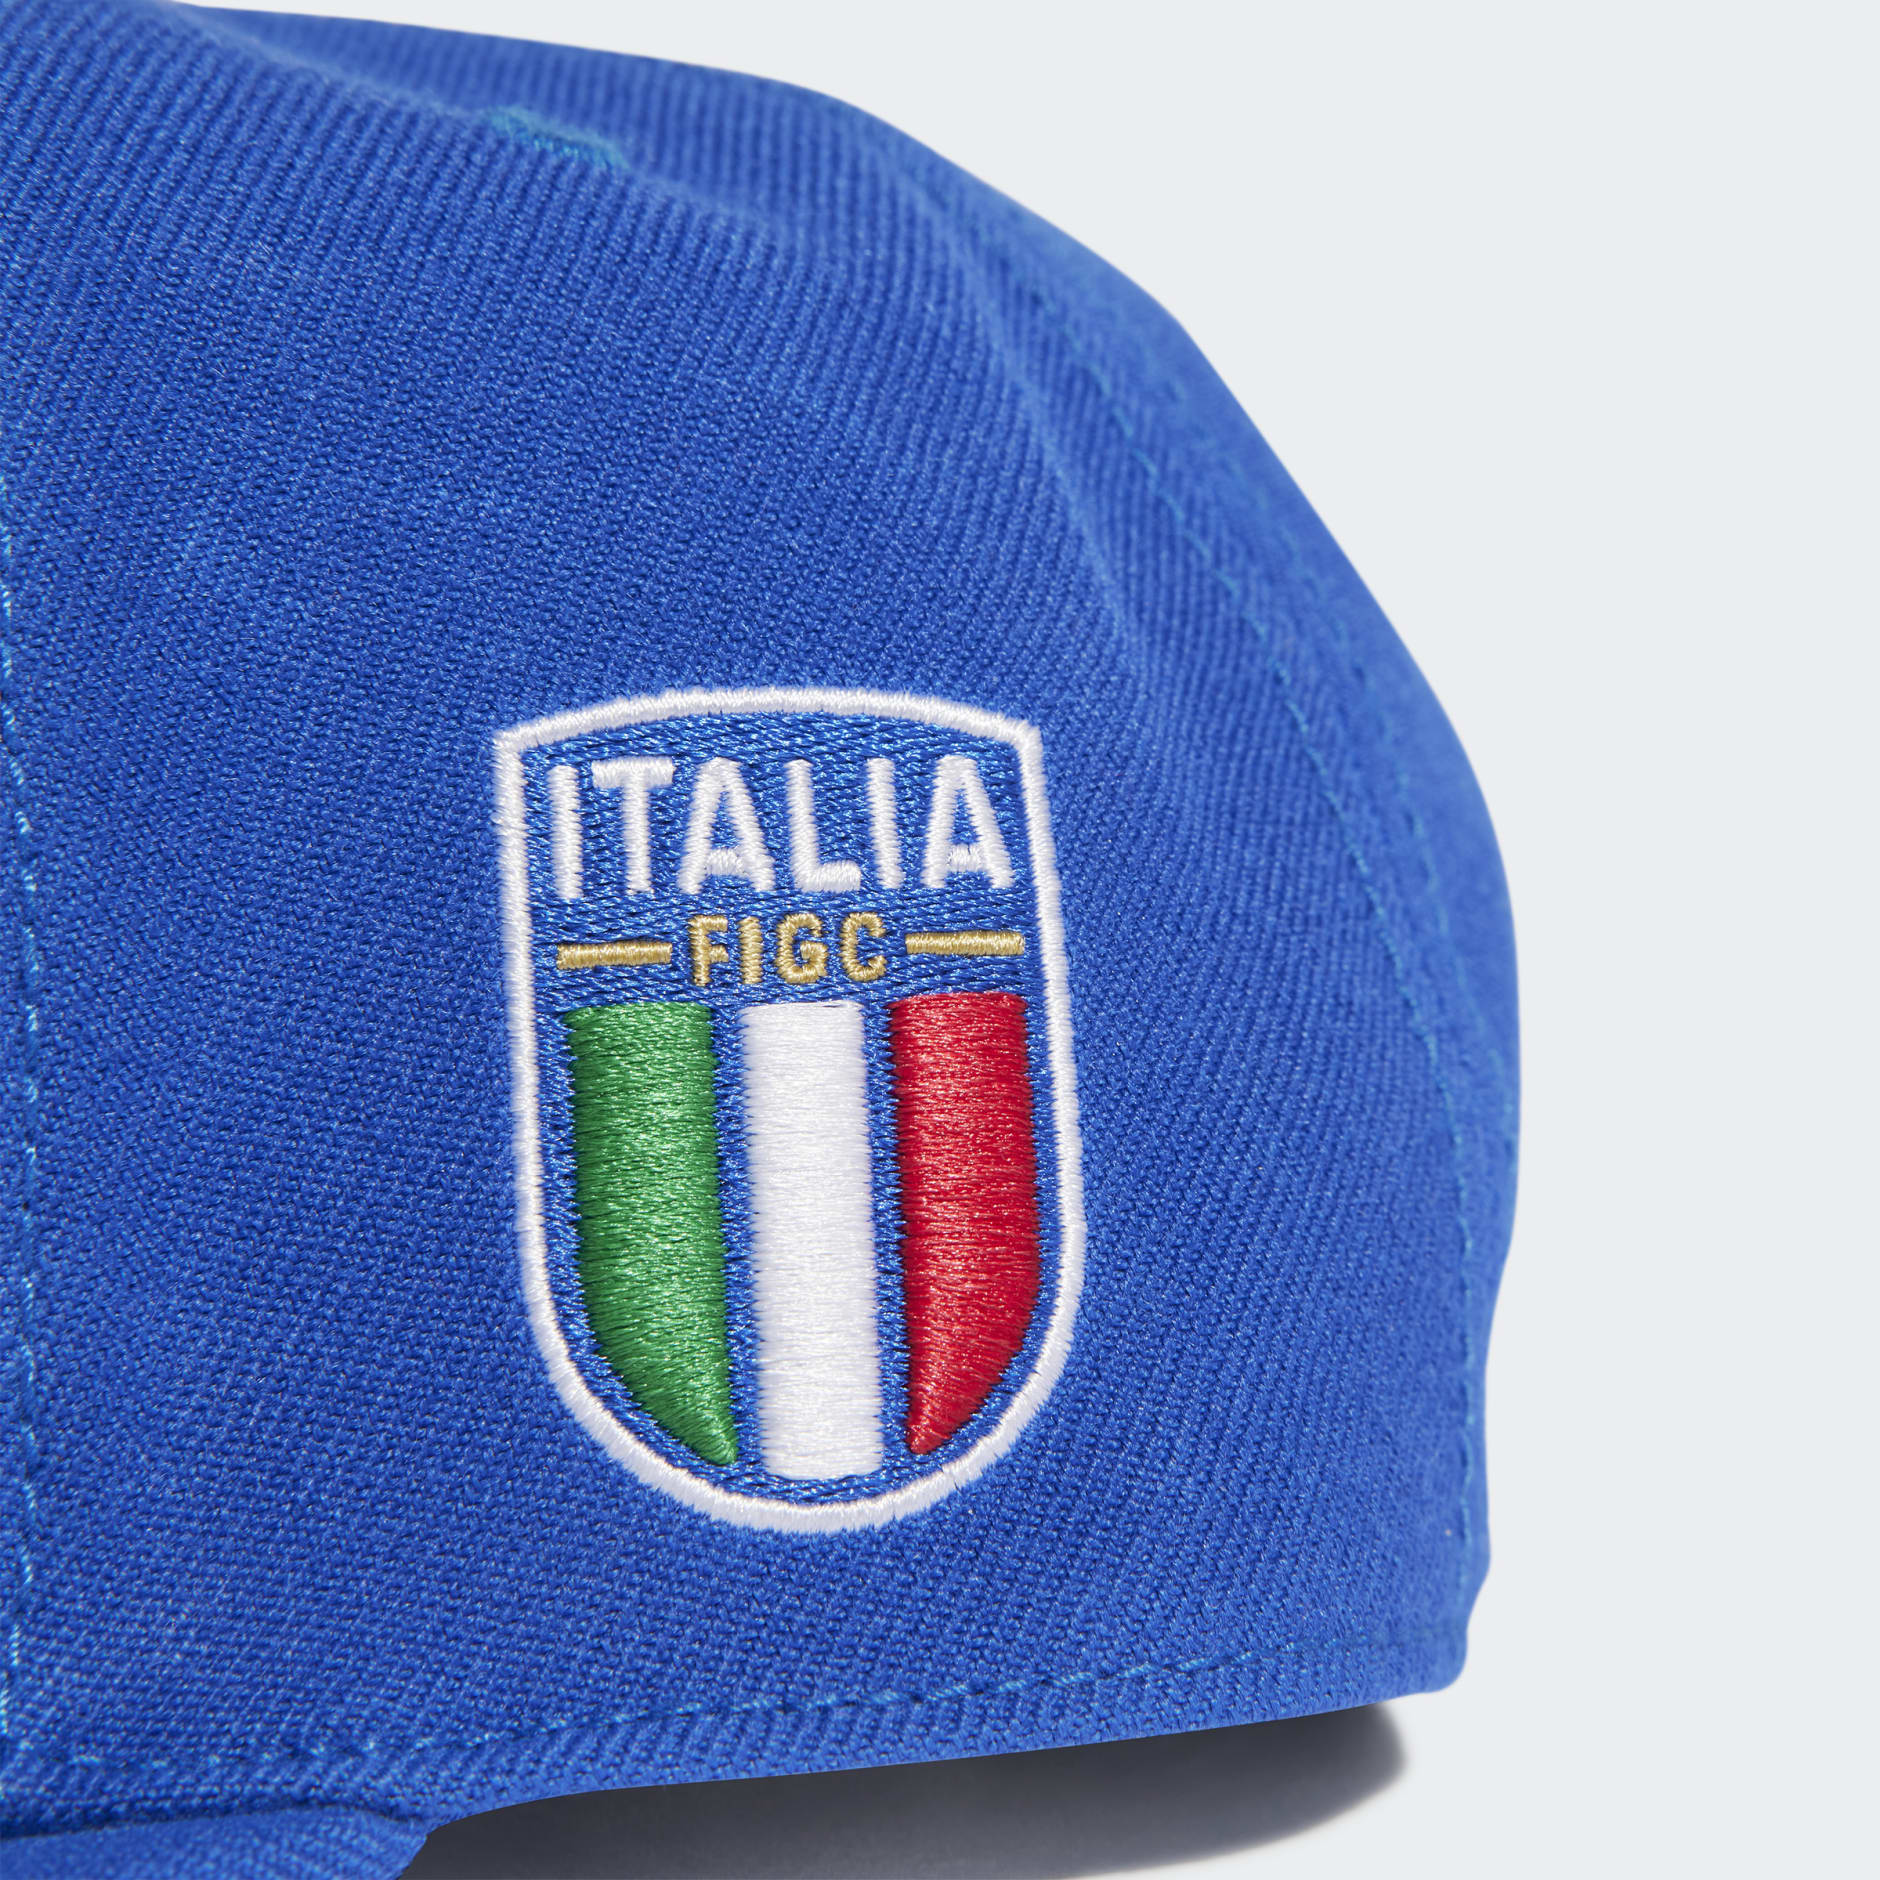 Accessories - Italian Football Snapback Cap - Blue | adidas Oman